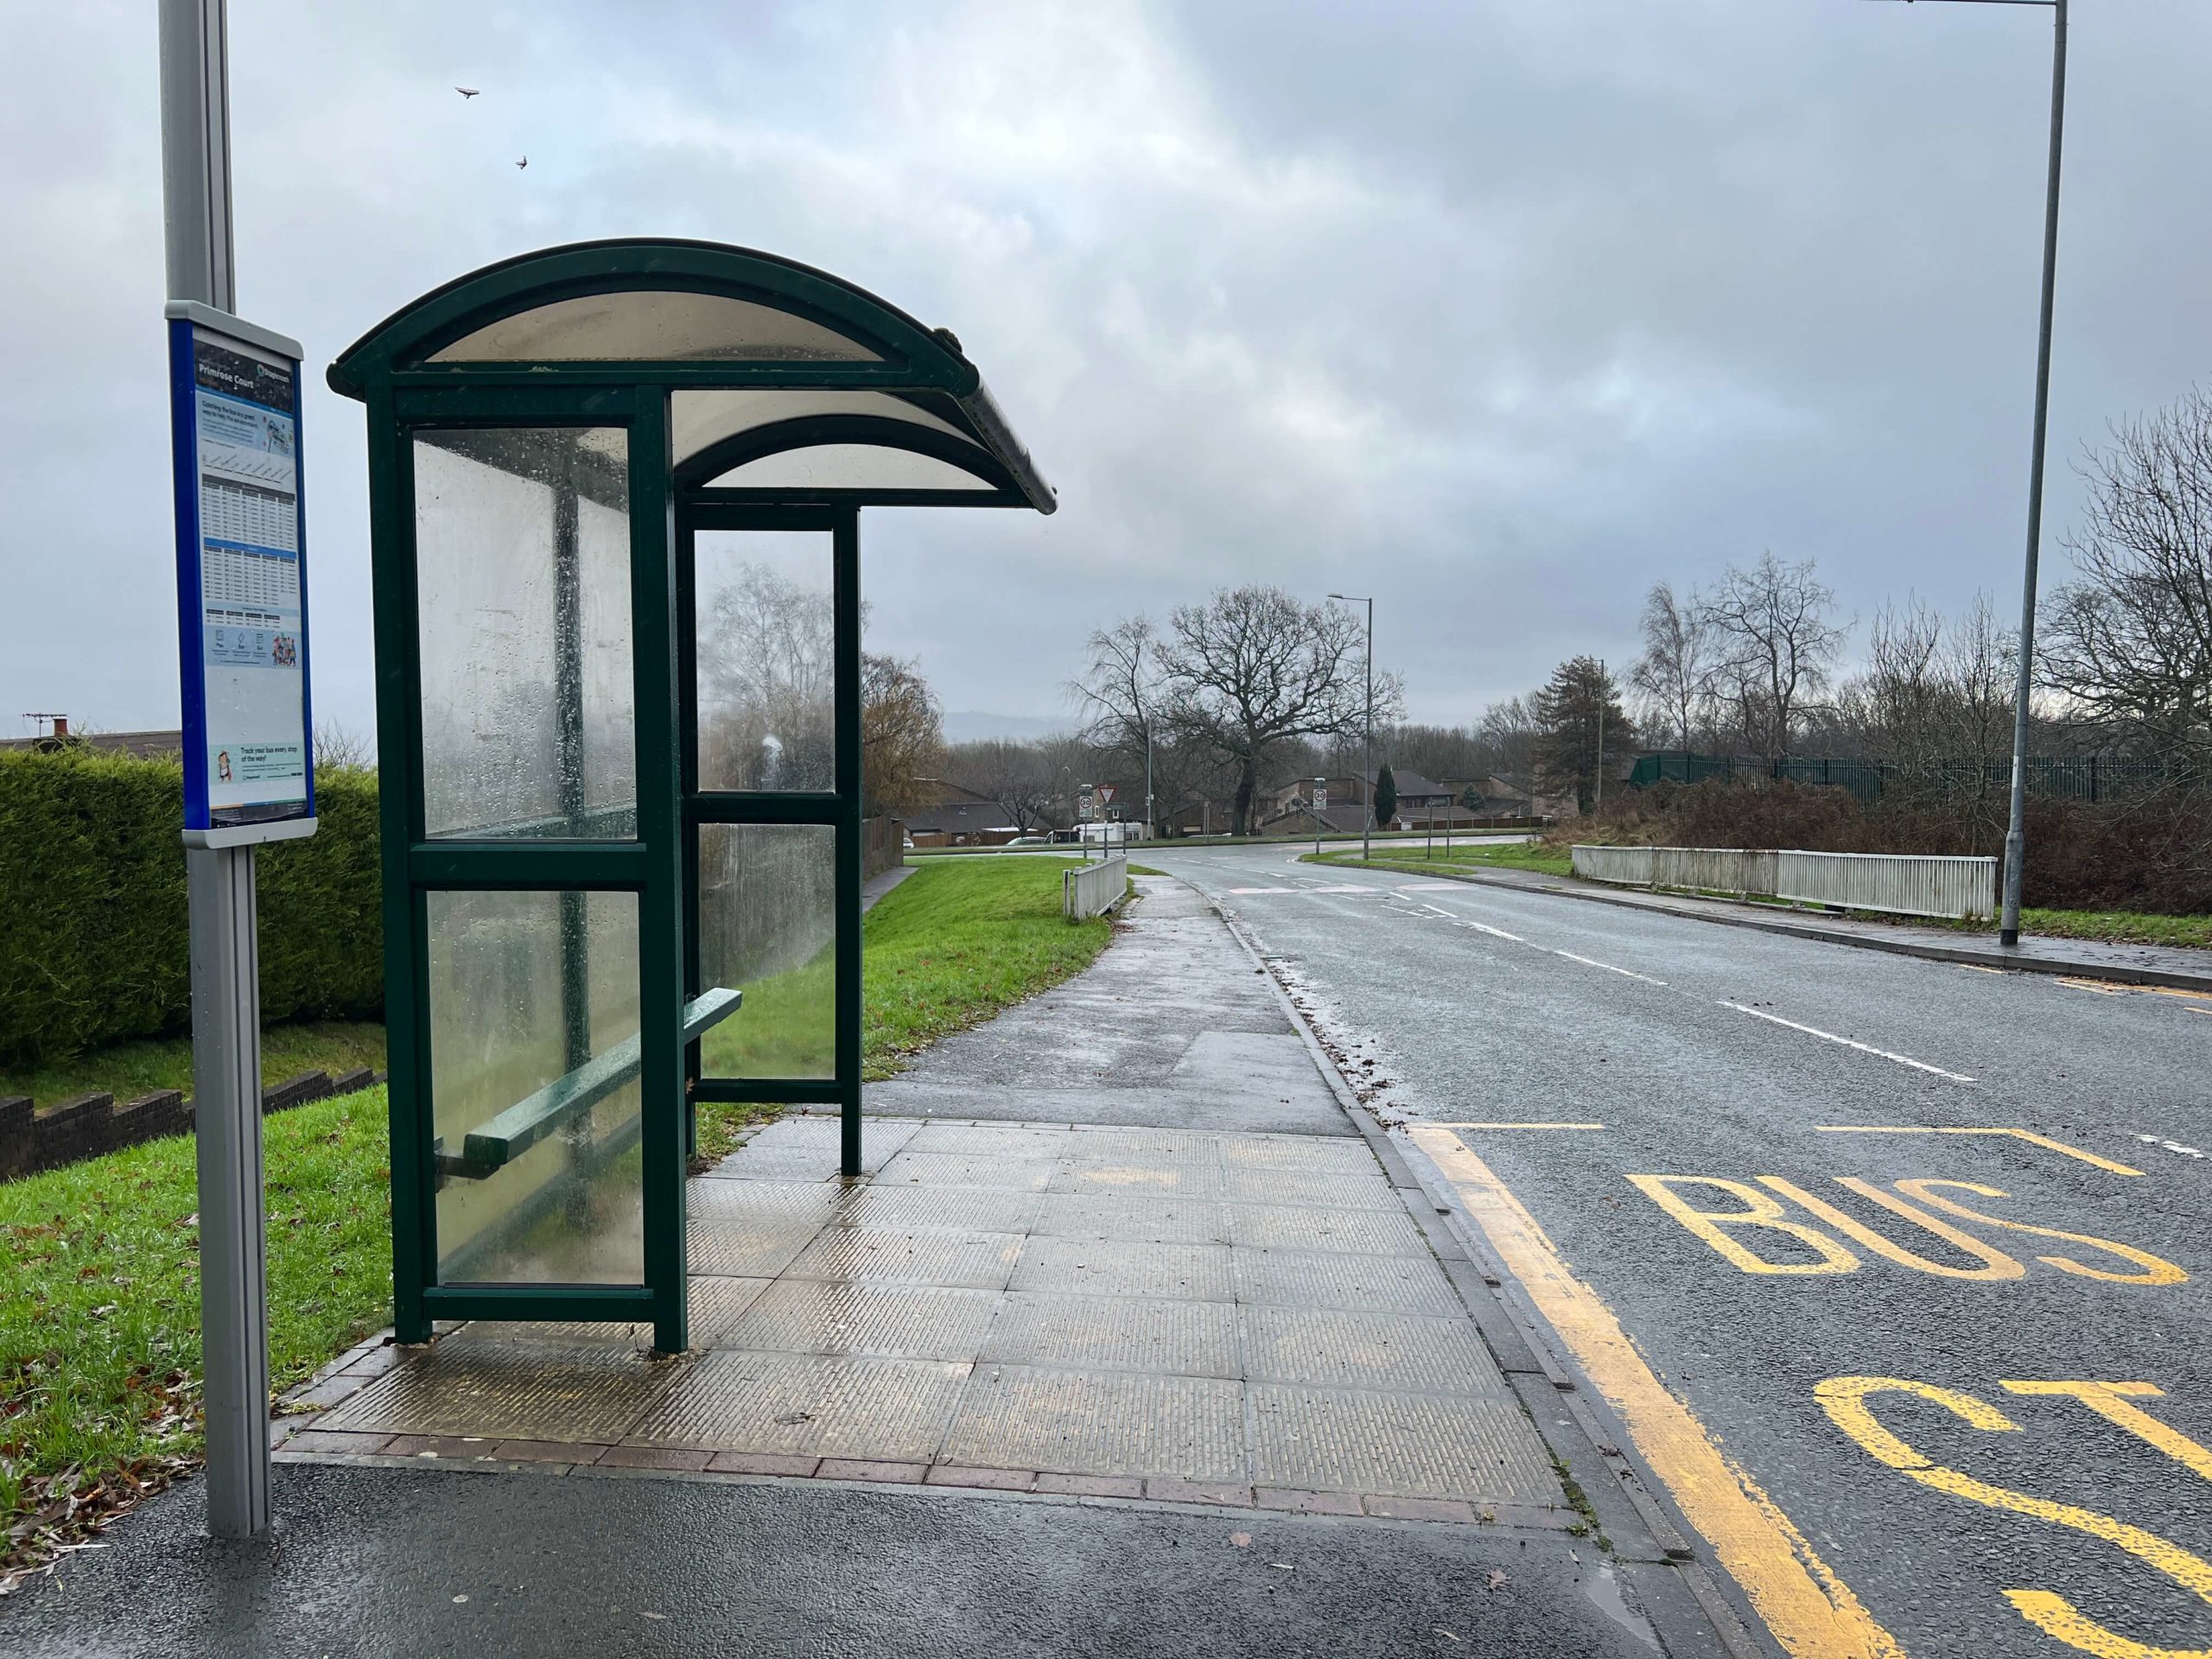 a bus stop